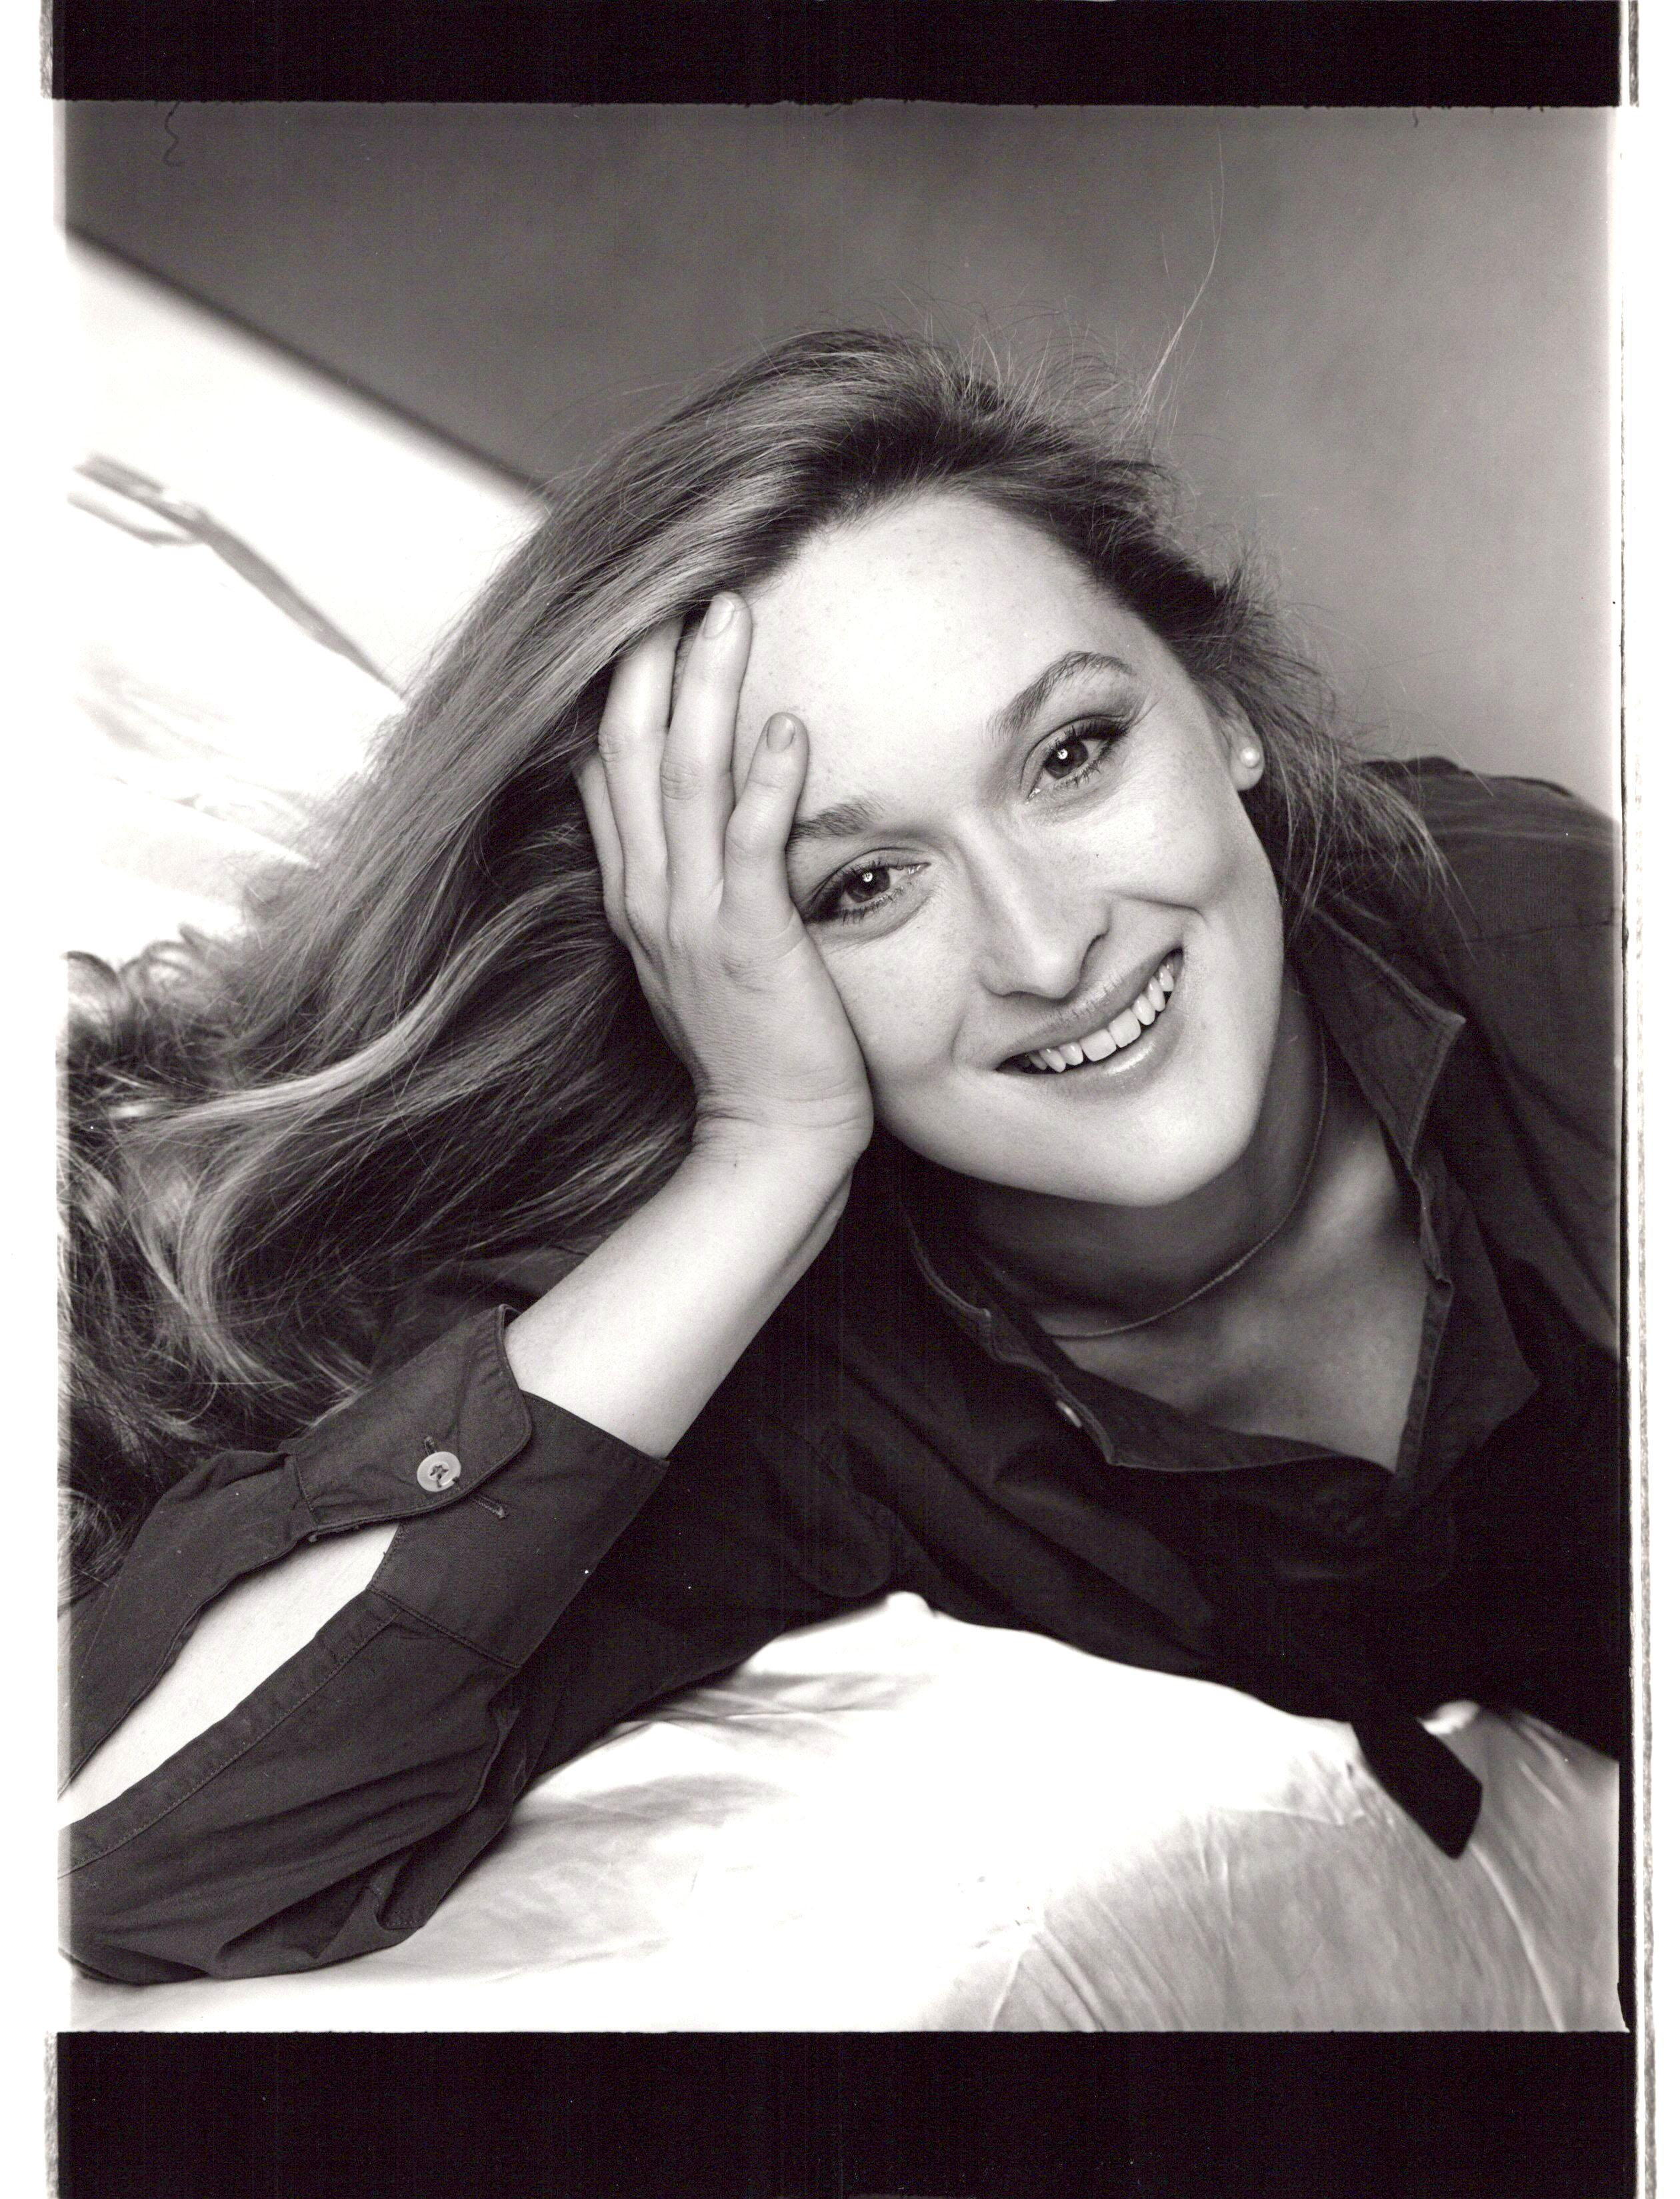 Jack Mitchell Black and White Photograph - Academy Award-winning actress Meryl Streep